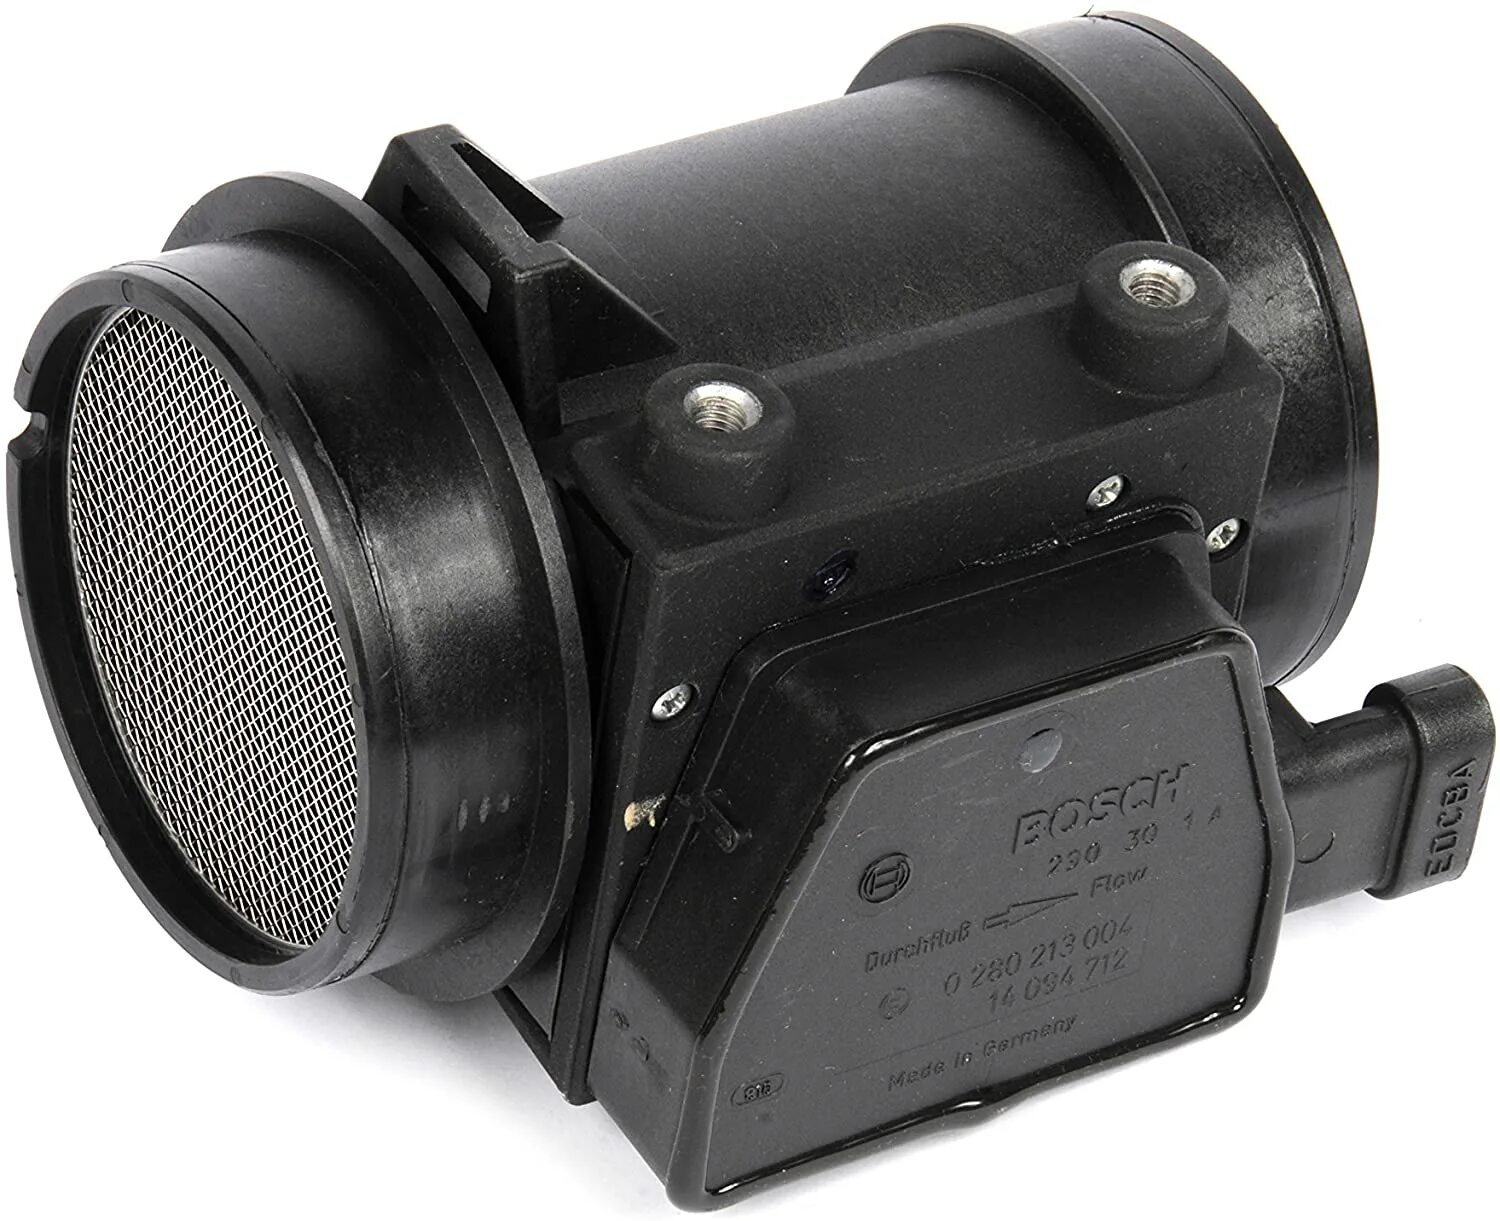 Amc520 Air Flow sensor. Airflow(ACDELCO #213-352). MAF датчик. Ultrasonic Air Flow sensor. By maf